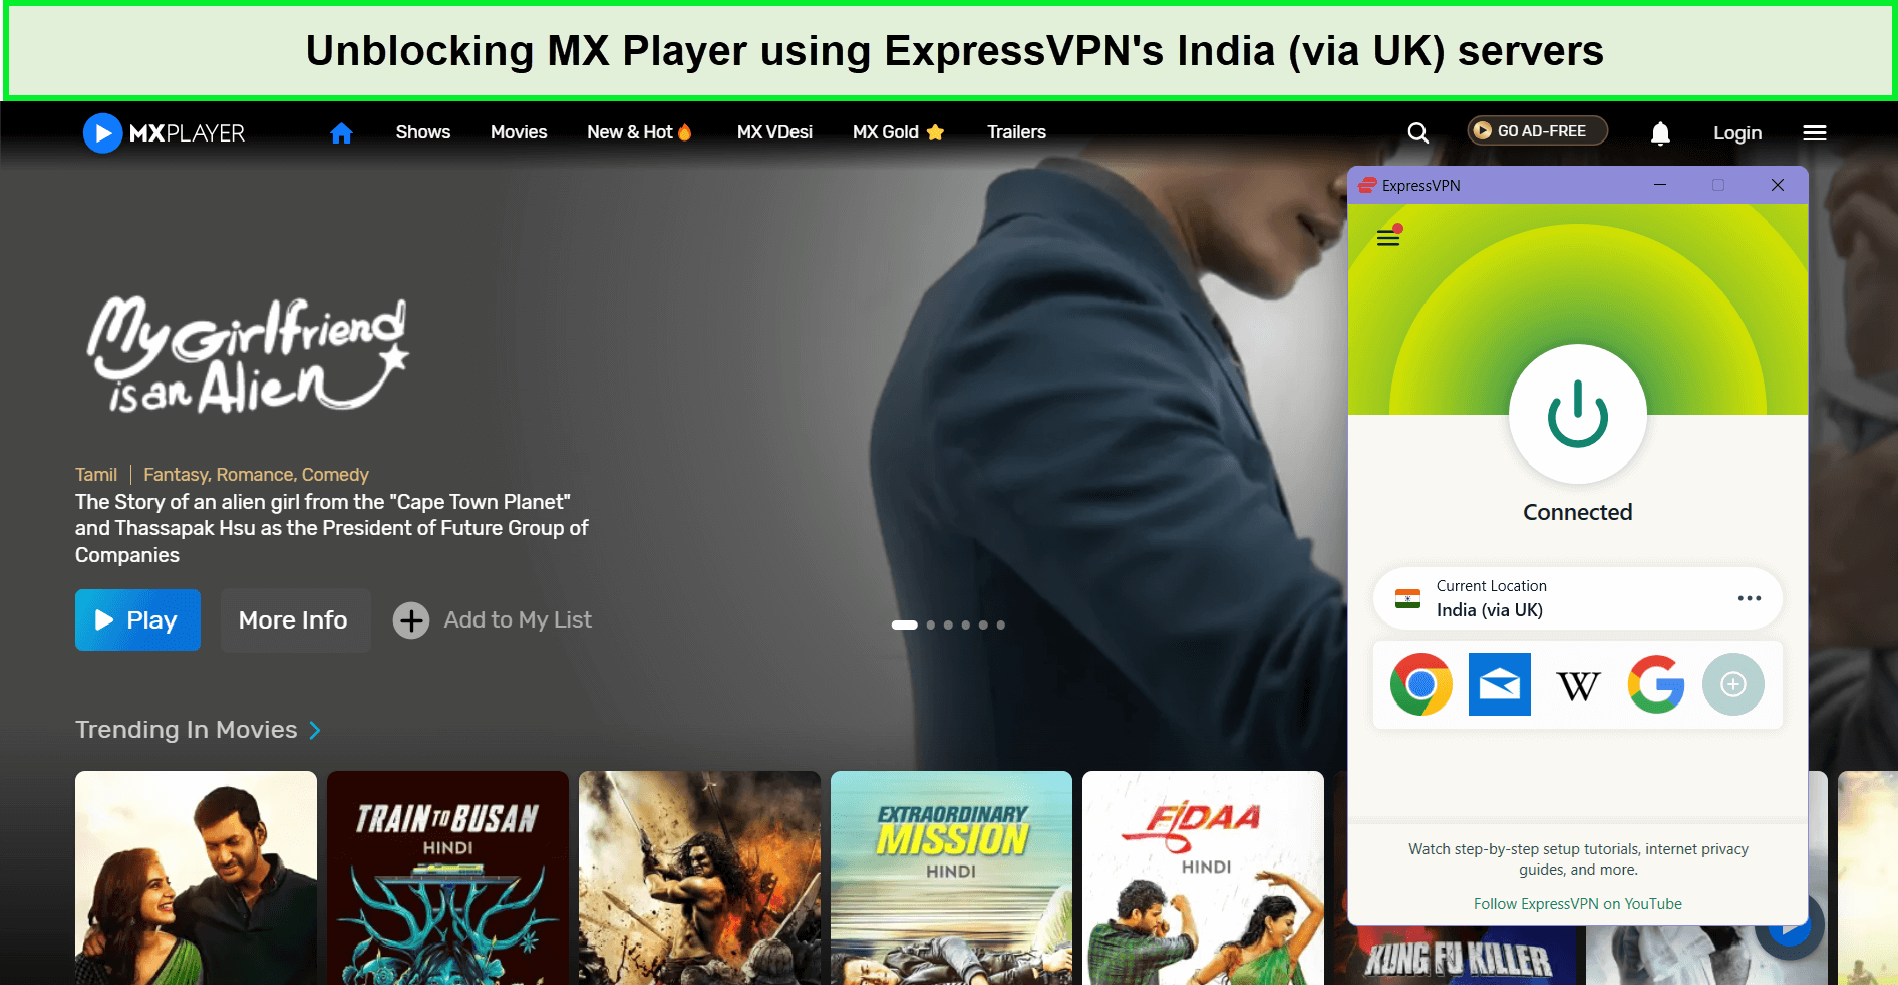 mx-player-in-Hong Kong-unblocked-expressvpn